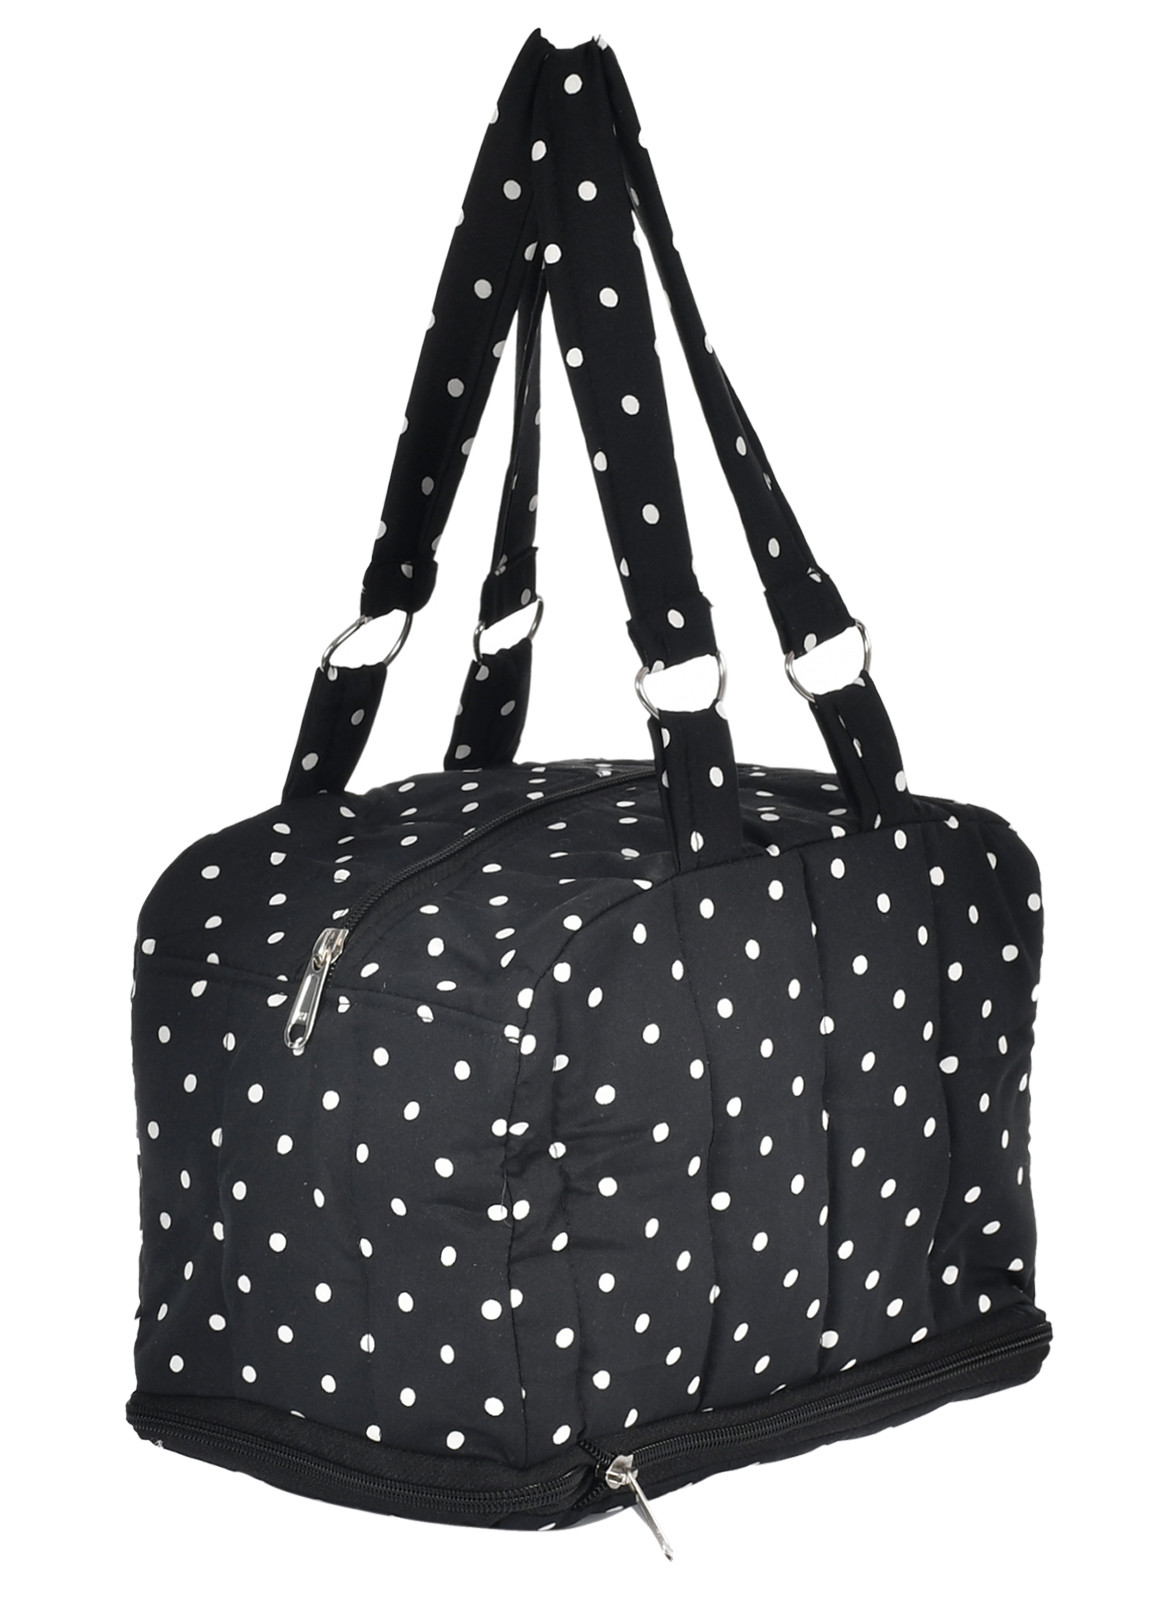 Kuber Industries Dot Printed Multiuses Hand Bag: Tote Bag: Travel Toiletry Bag For Women/Girls (Black)-45KM017